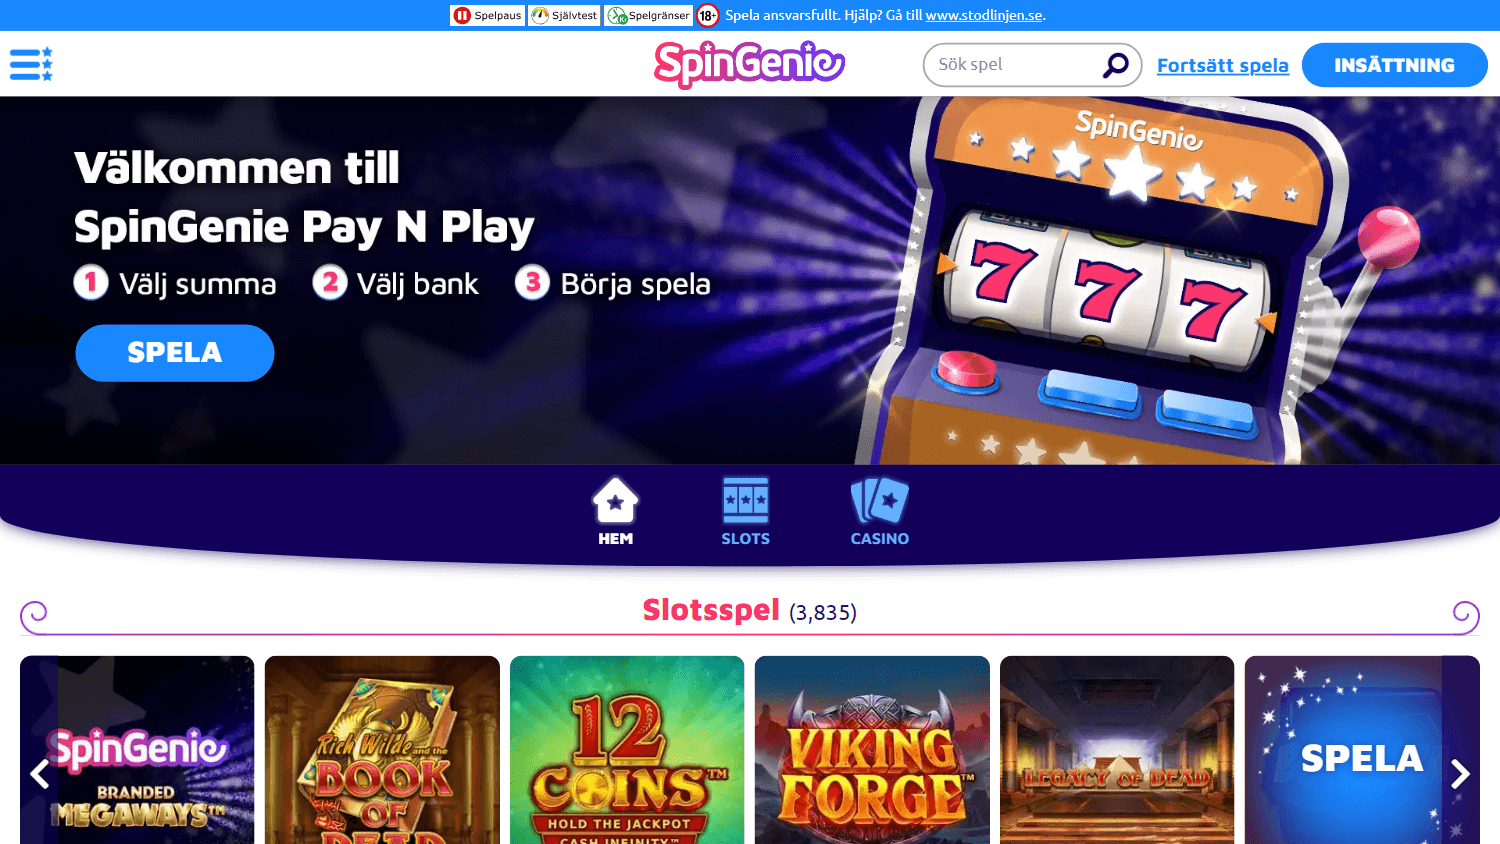 spingenie_casino_se_homepage_desktop